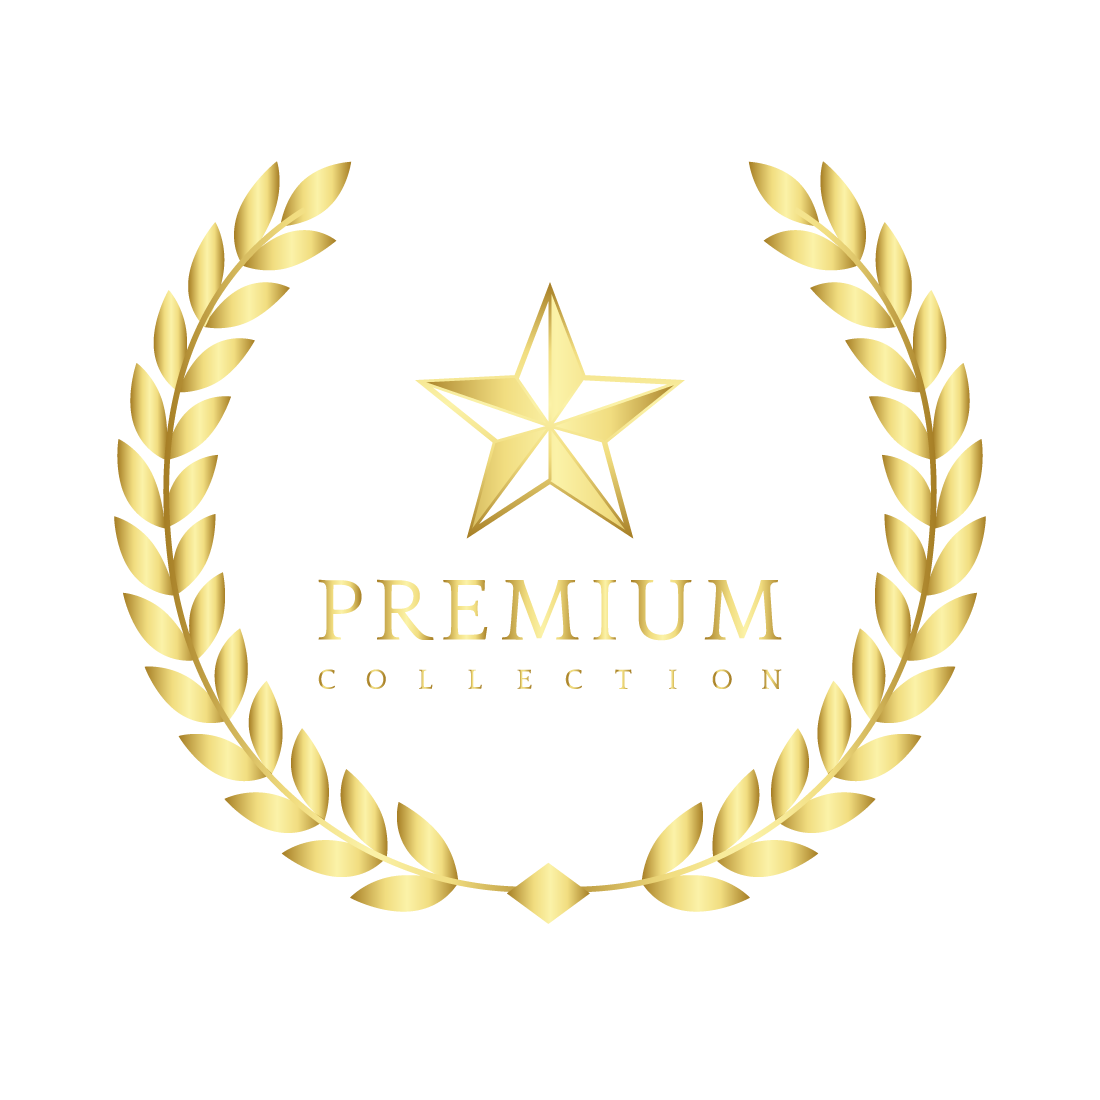 Premium collection badge design preview image.